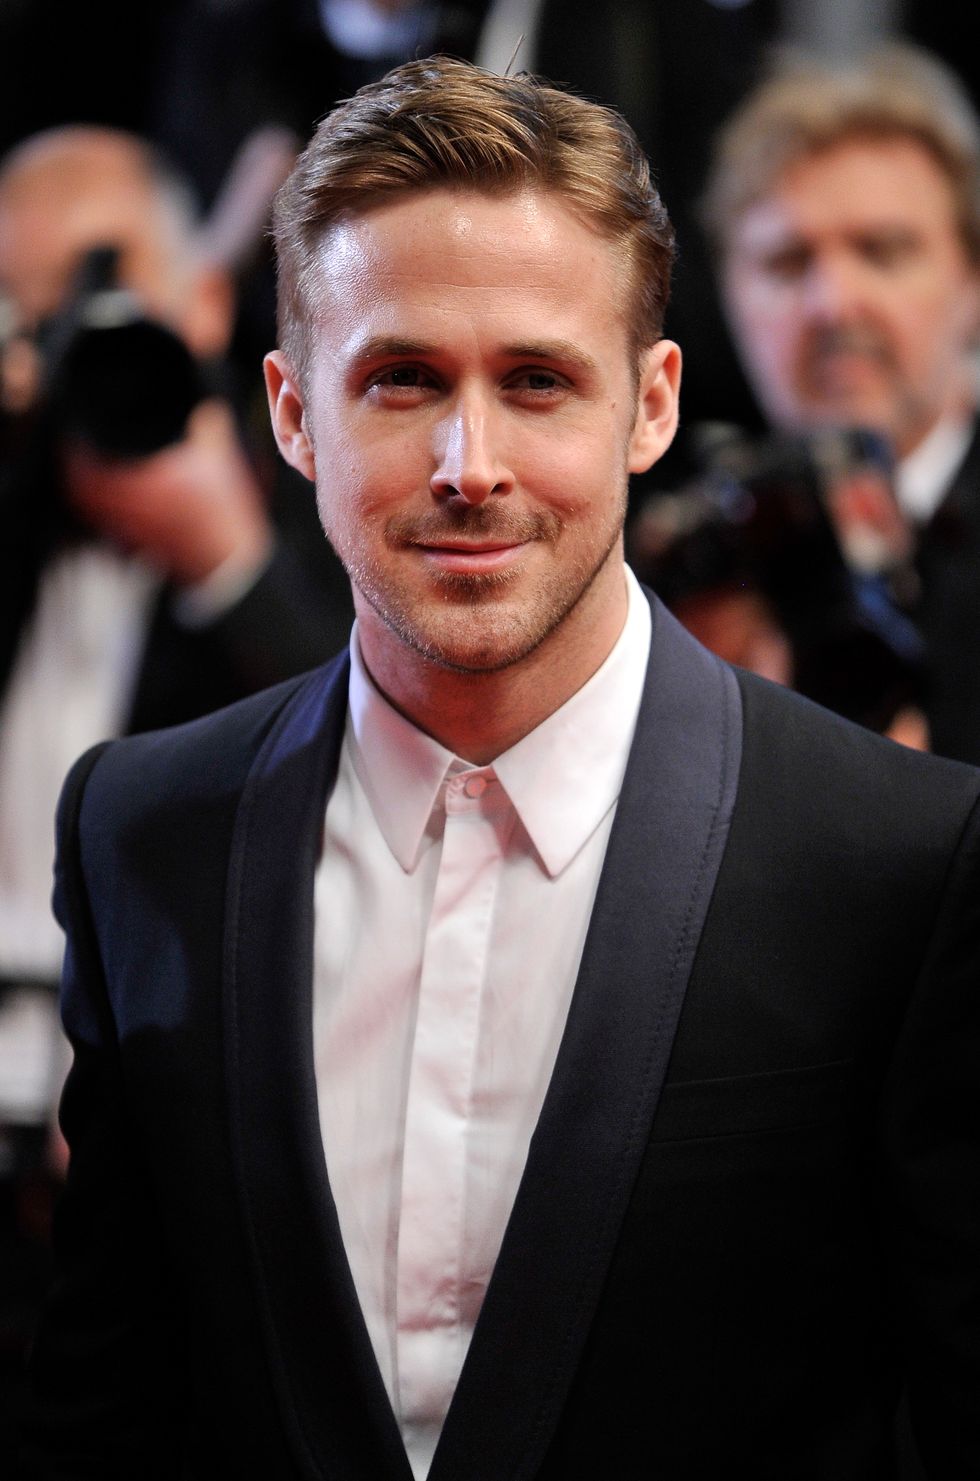 Ryan Gosling and Emma Stone to reunite